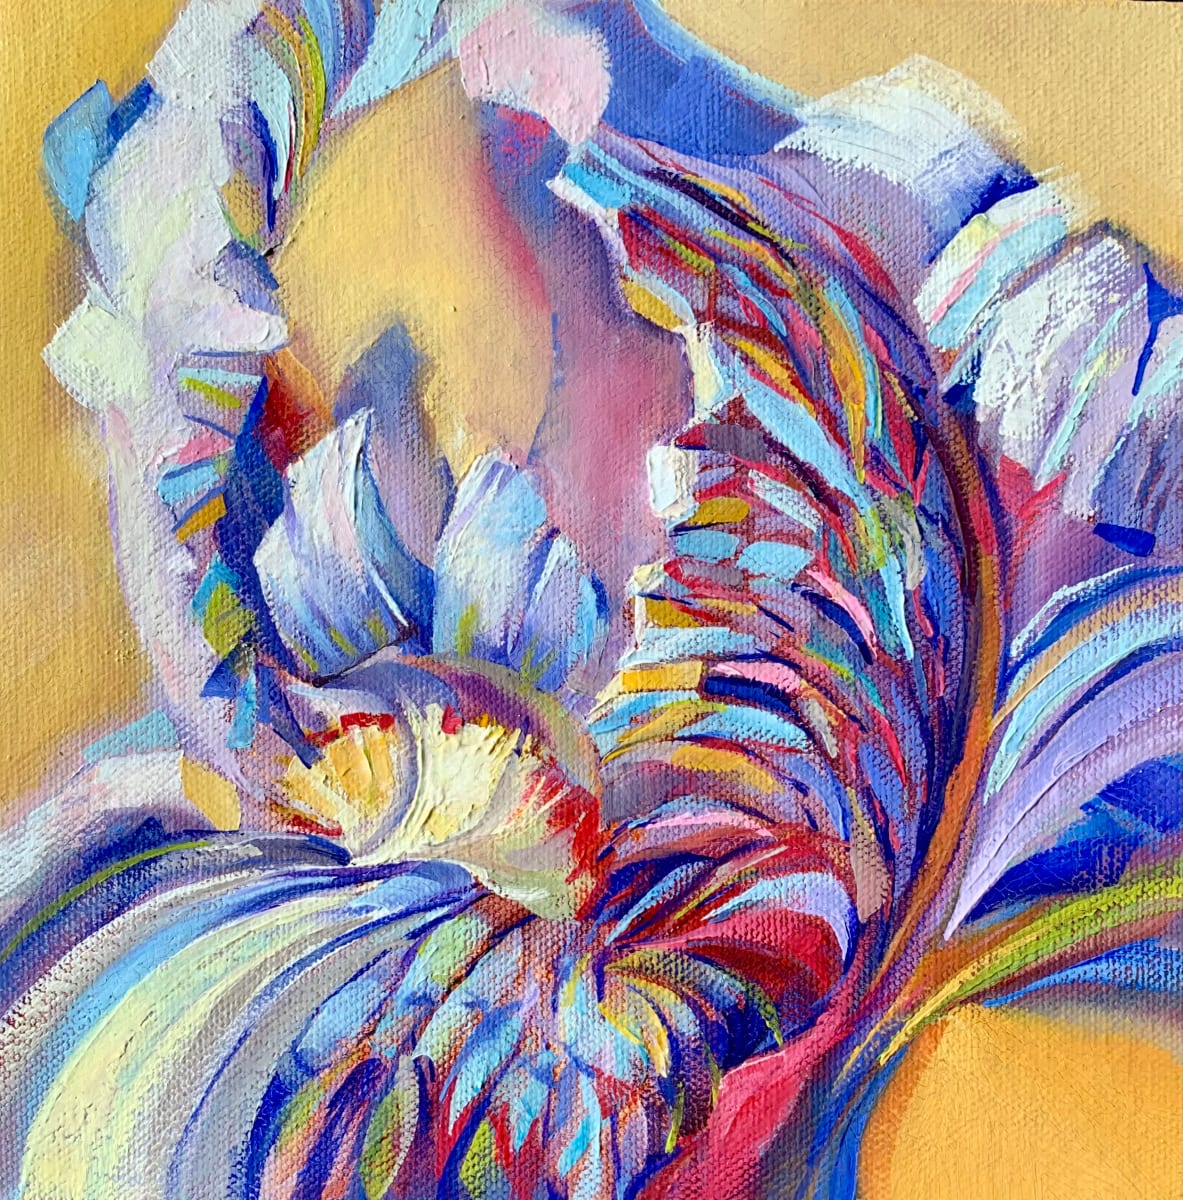 Regal Iris by Pat Cross  Image: New painting